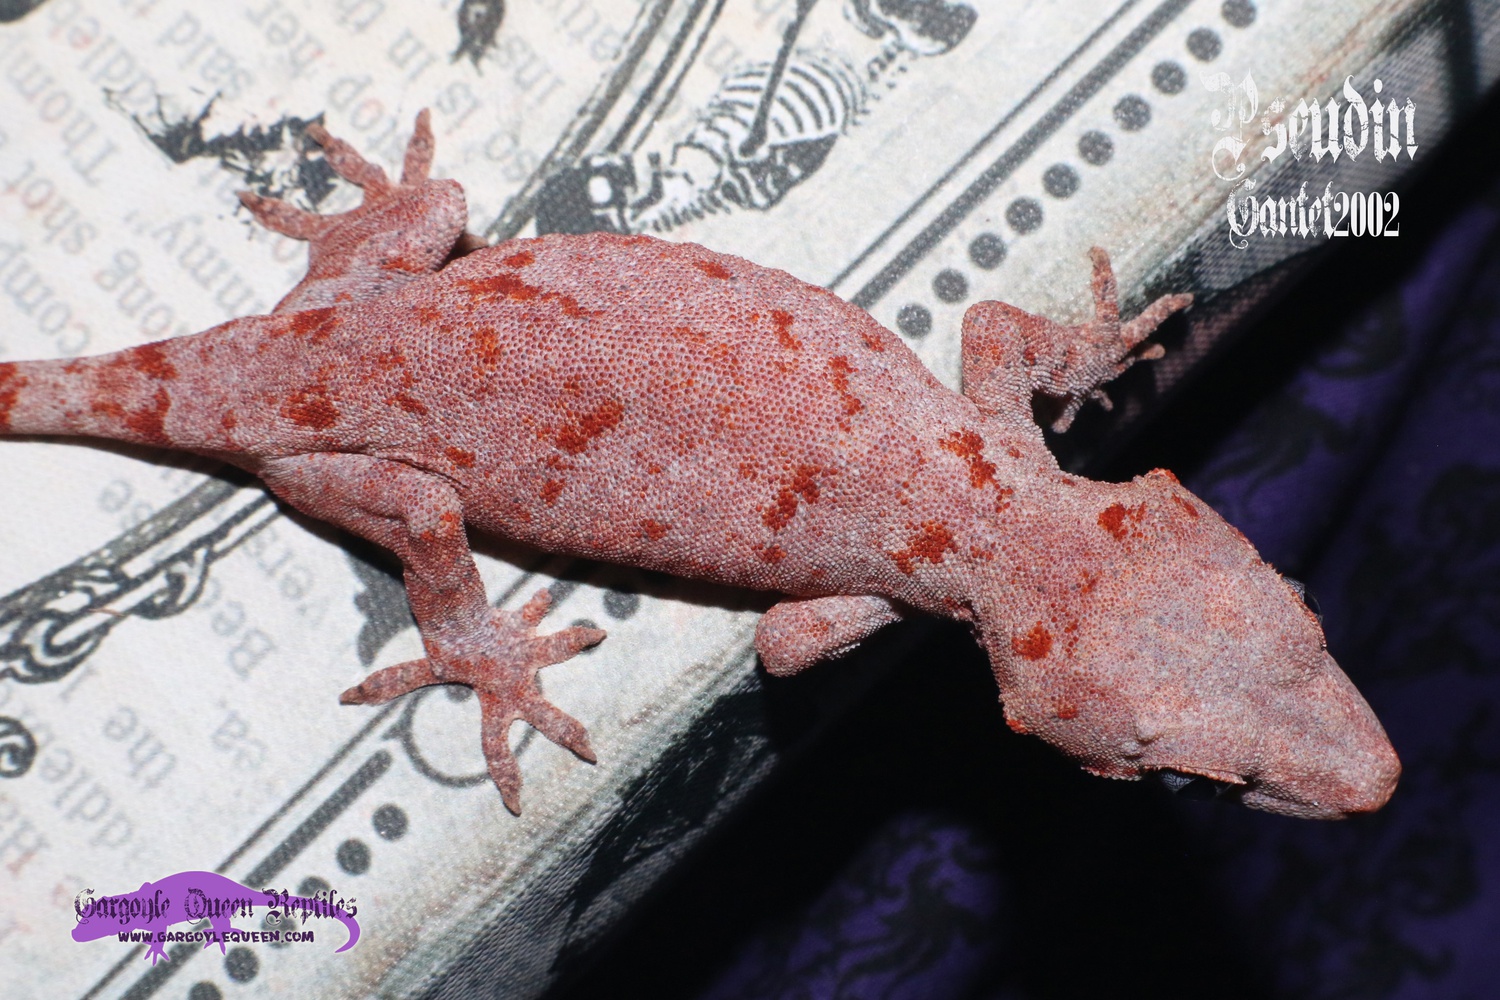 "Pseudin" Red Blotch W/ Pink Base Reticulated Gargoyle Gecko by Gargoyle Queen Reptiles